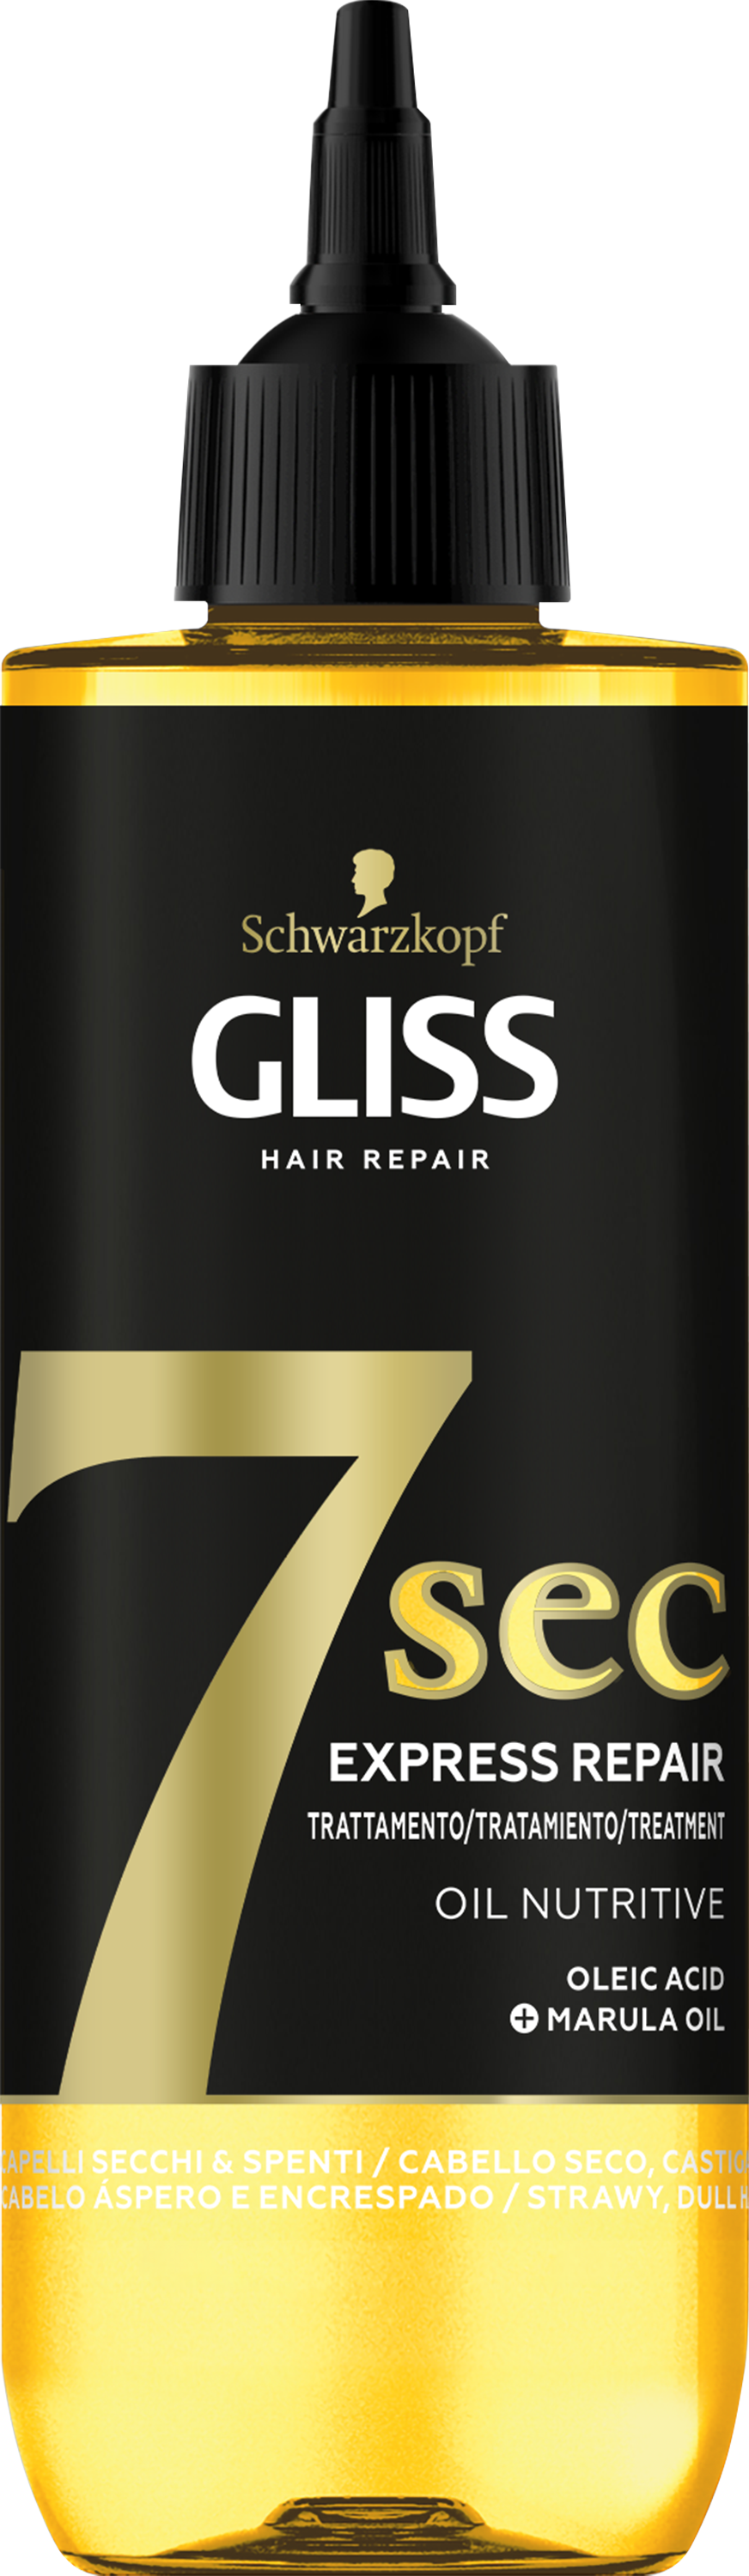 Gliss Hair Repair Sealing 2-in-1 Treatment - Mask for Damaged Hair & Split  Ends | Makeup.uk